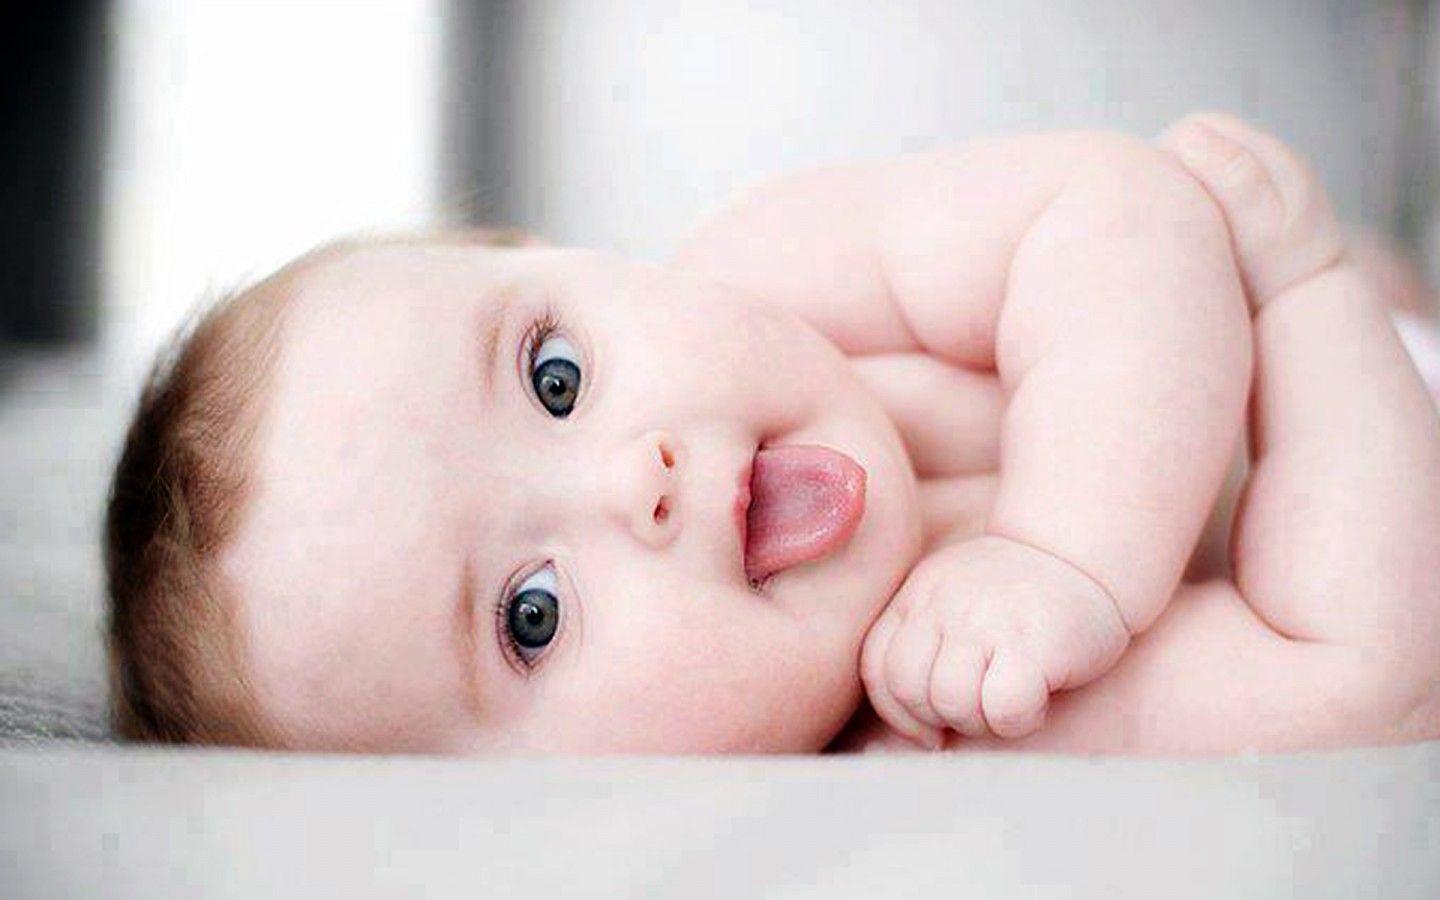 Cute Baby Wallpaper For Desktop Free Download Group. Cute baby wallpaper, Baby wallpaper, Baby wallpaper hd